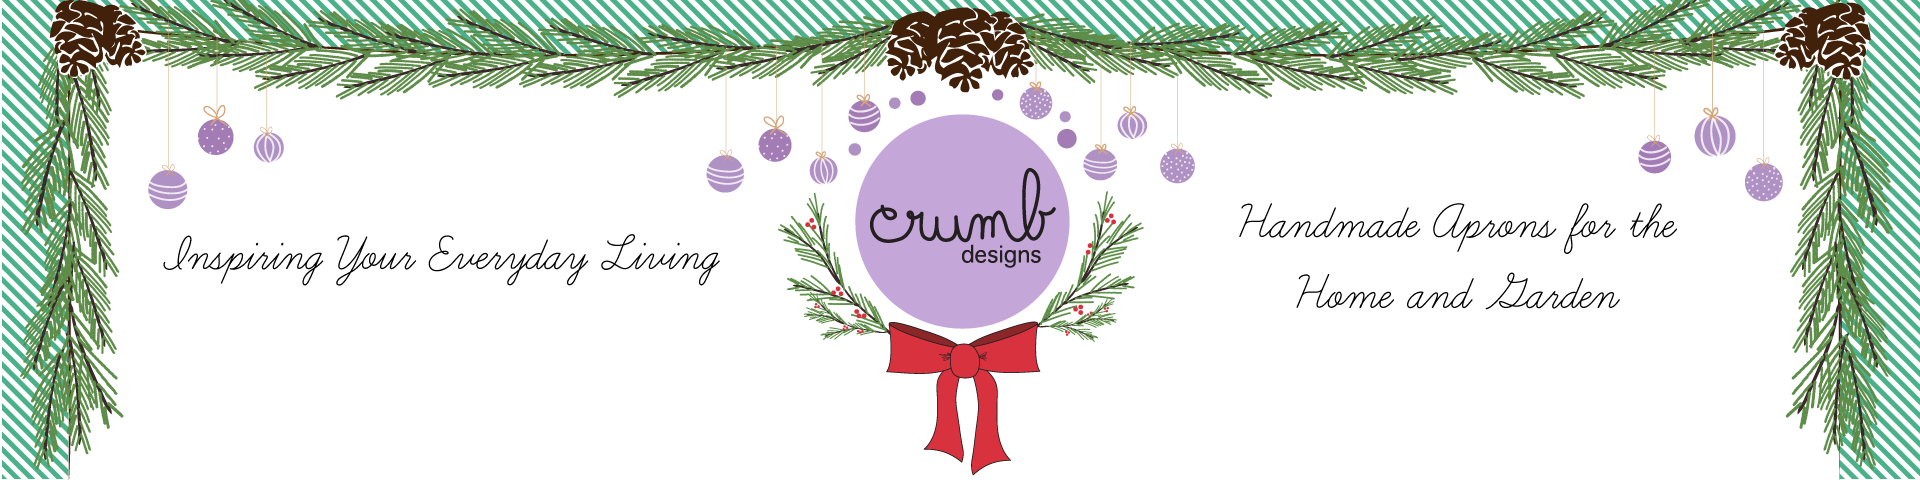 Crumb Designs